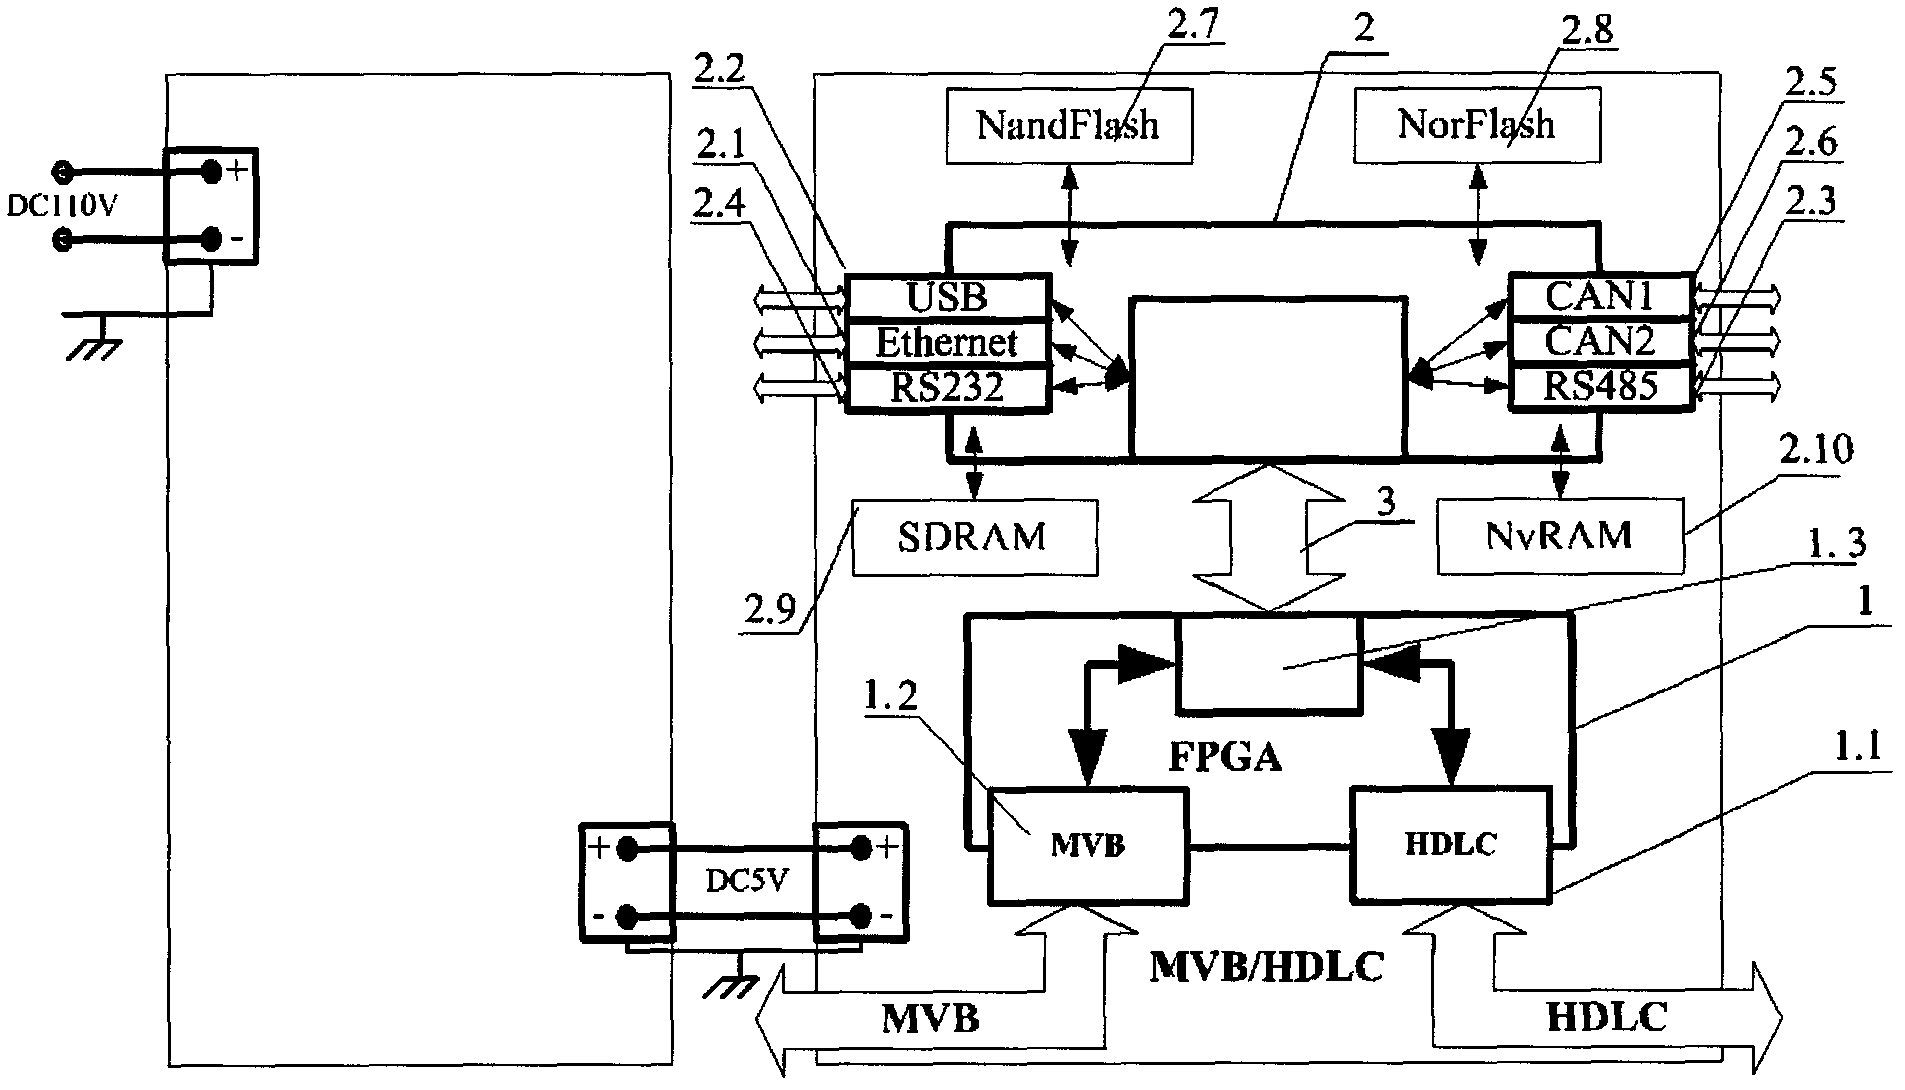 MVB (Multifunction Vehicle Bus)/HDLC (High-level Data Link Control) gateway device